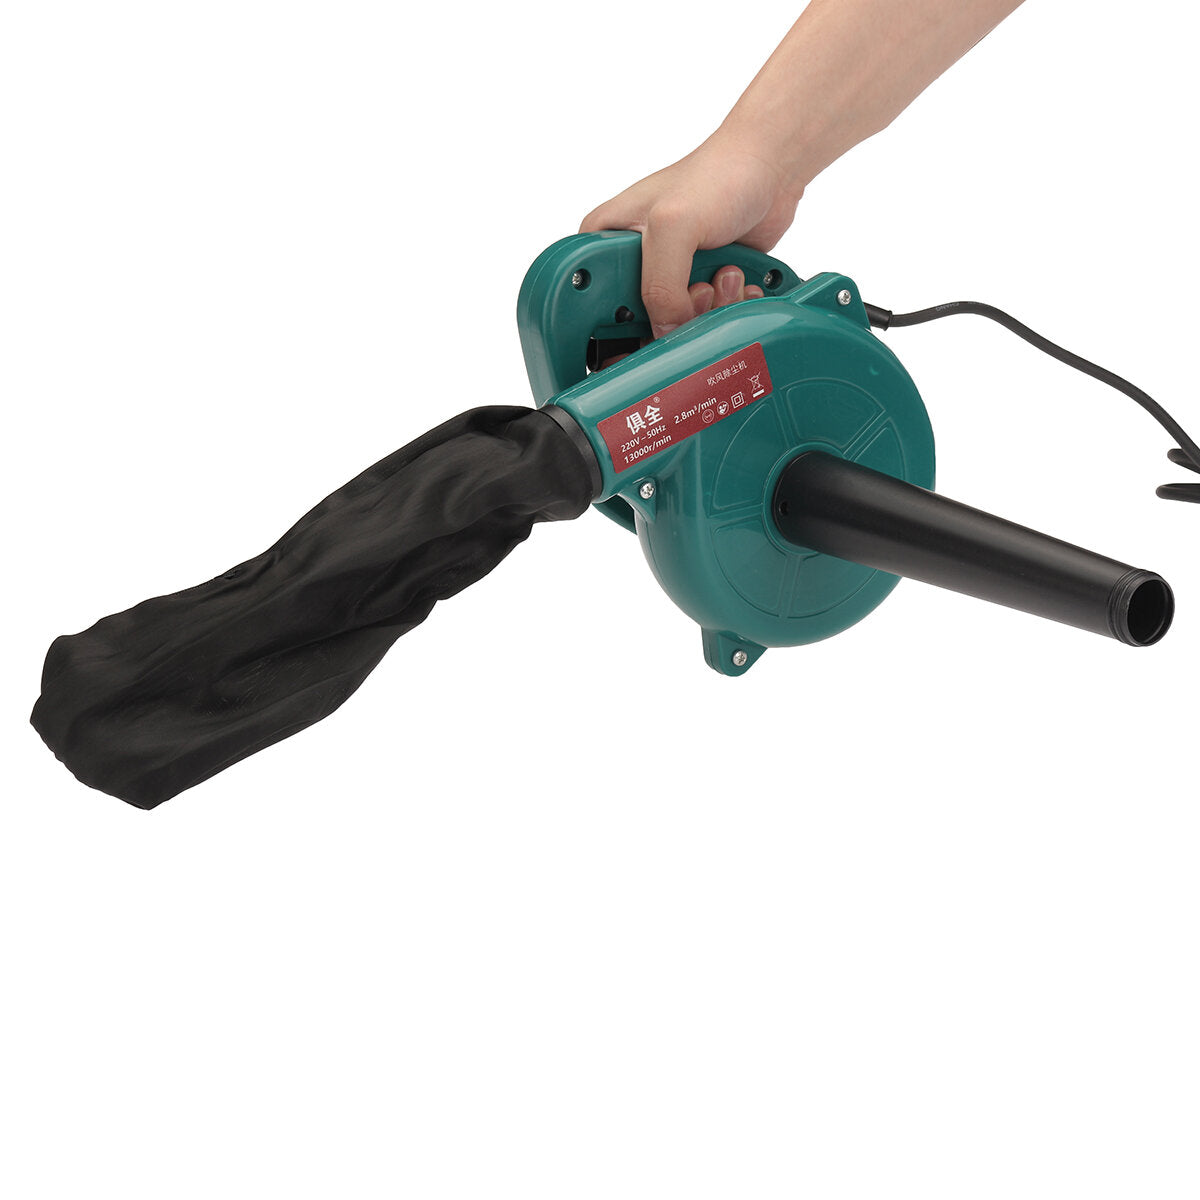 1000W Electric Air Blower Sweeper Vacuum Dust Cleaner Handheld Leaf Blower Cleaning Tool